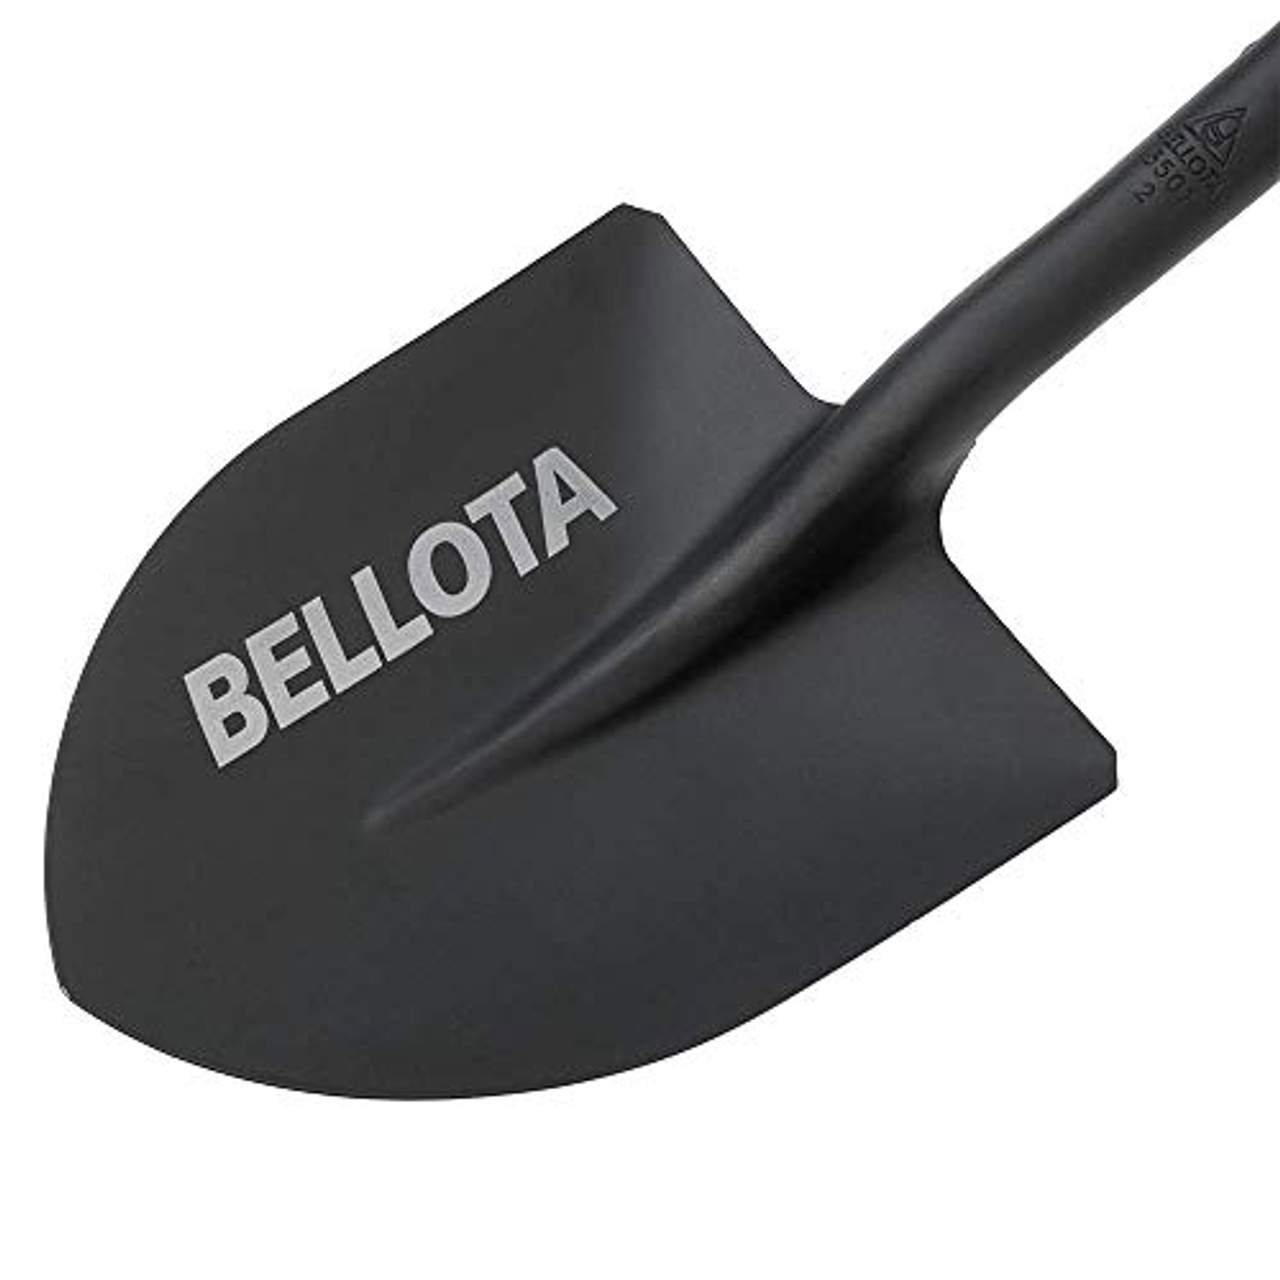 Bellota 5501-3 MA Schaufel mit spitz zulaufendem Schaufelblatt